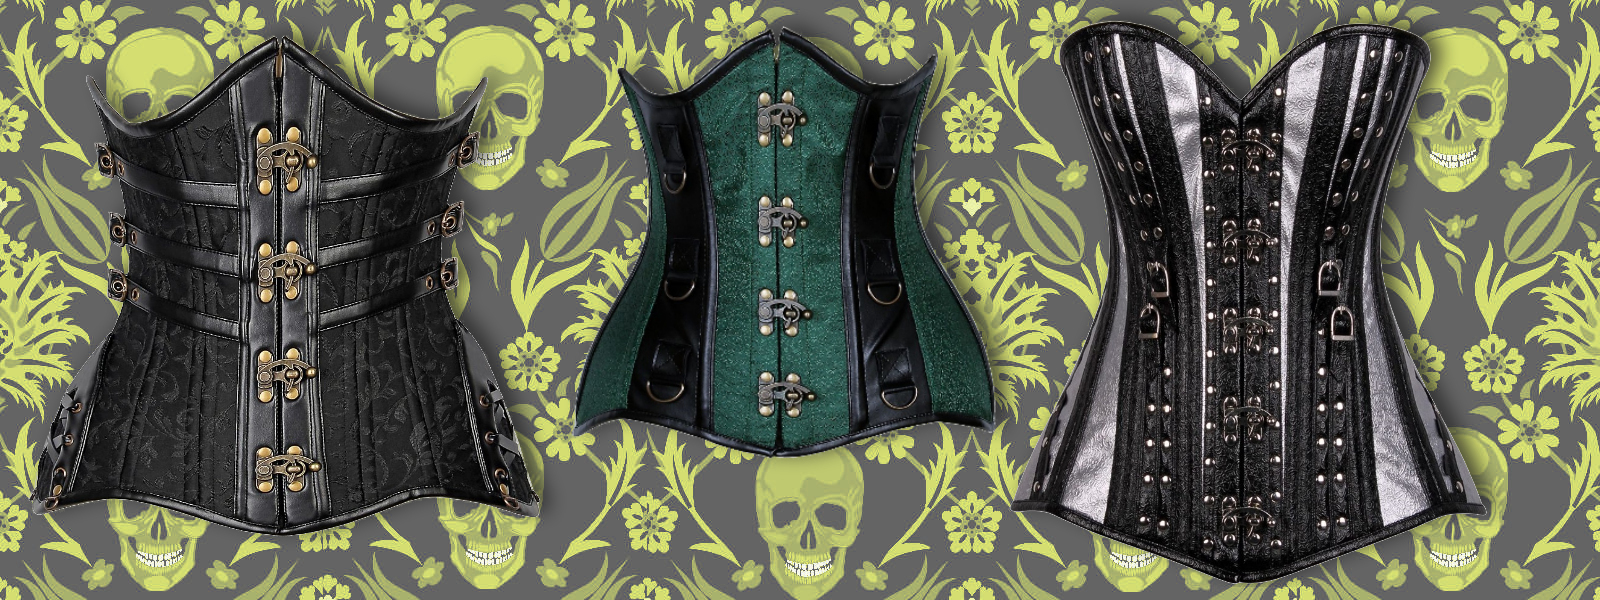 Womens Gothic Boned Black Steampunk Corset Top Costume Plus Size Gold